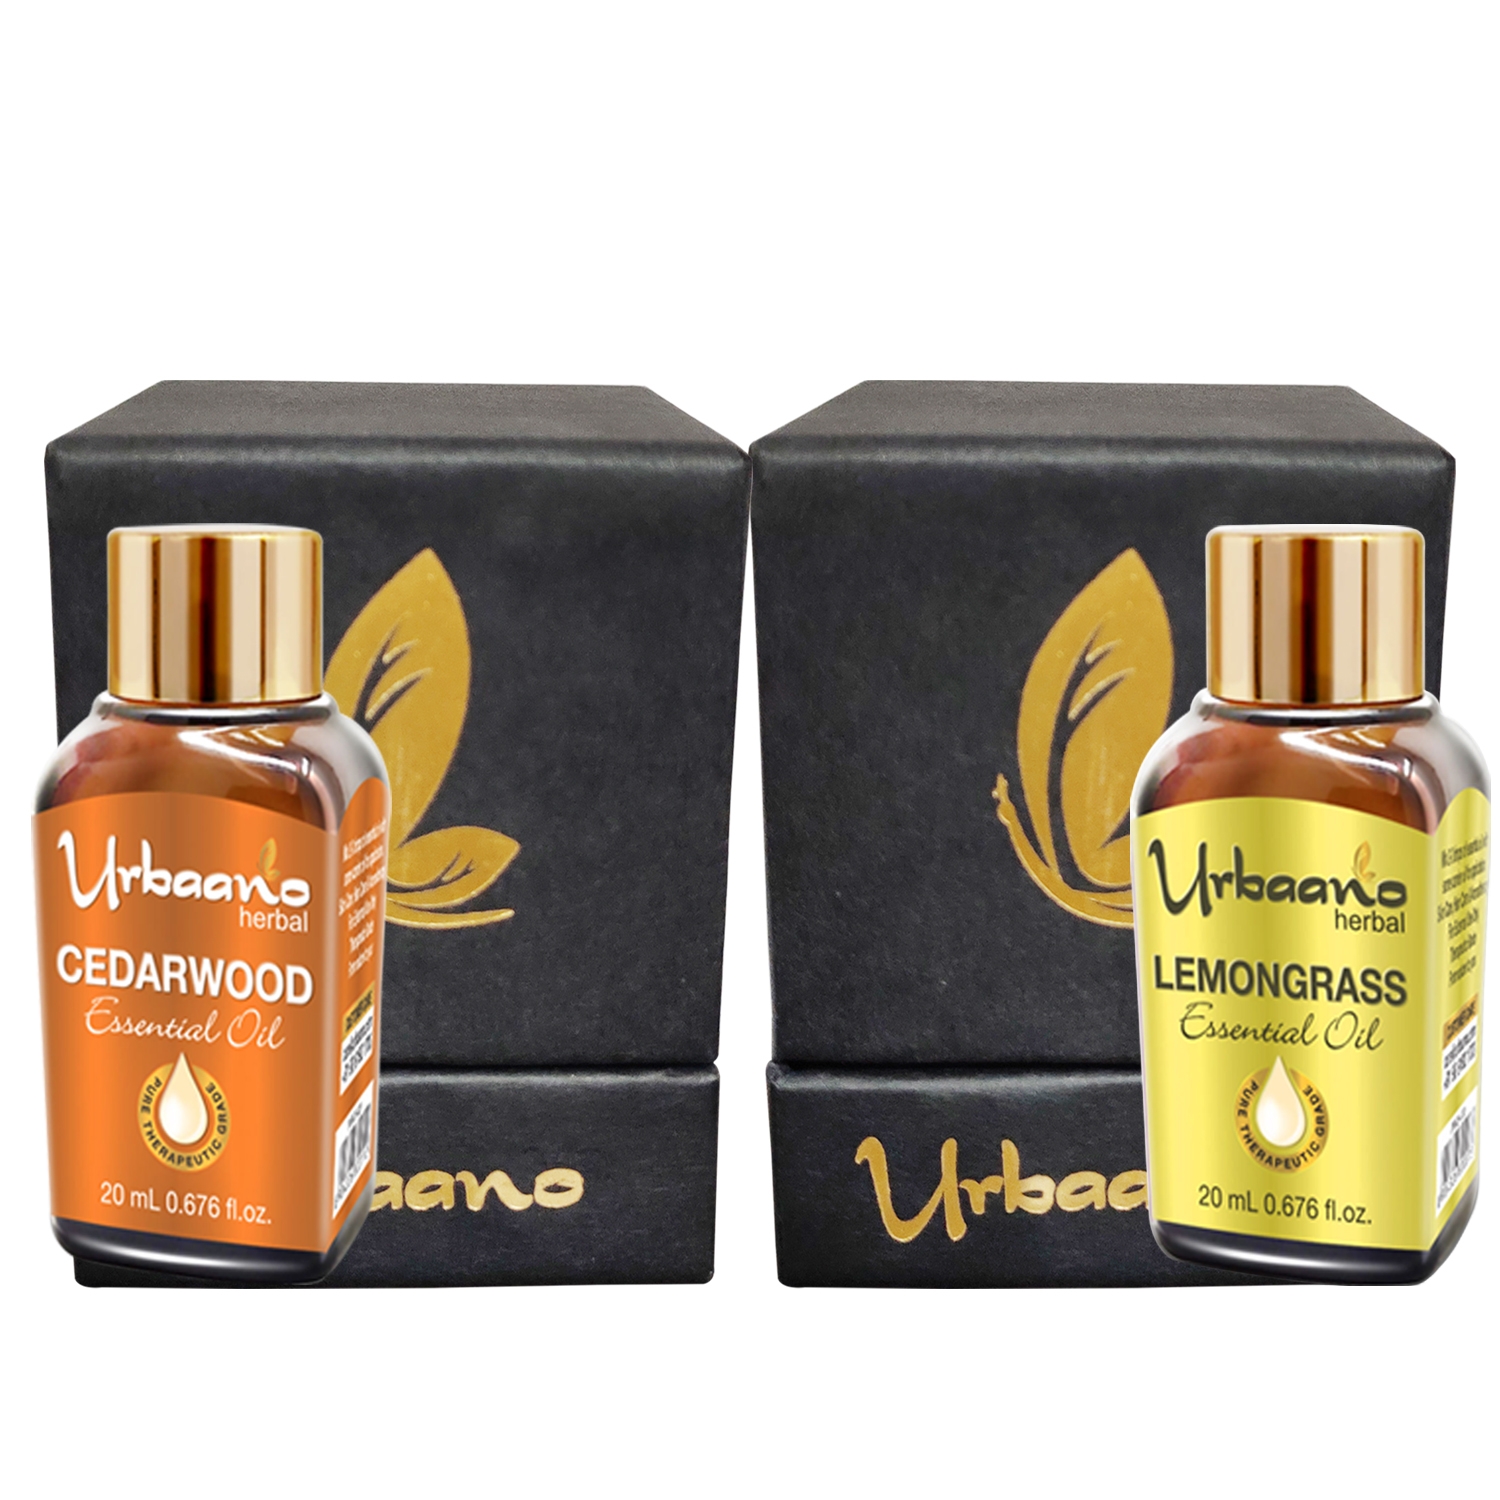 Urbaano Herbal | Urbaano Herbal Lemongrass & Cedarwood Essential Oil 20 ml each -for Hair-Skin-Aromatherapy - 100% Undiluted Therapeutic Grade